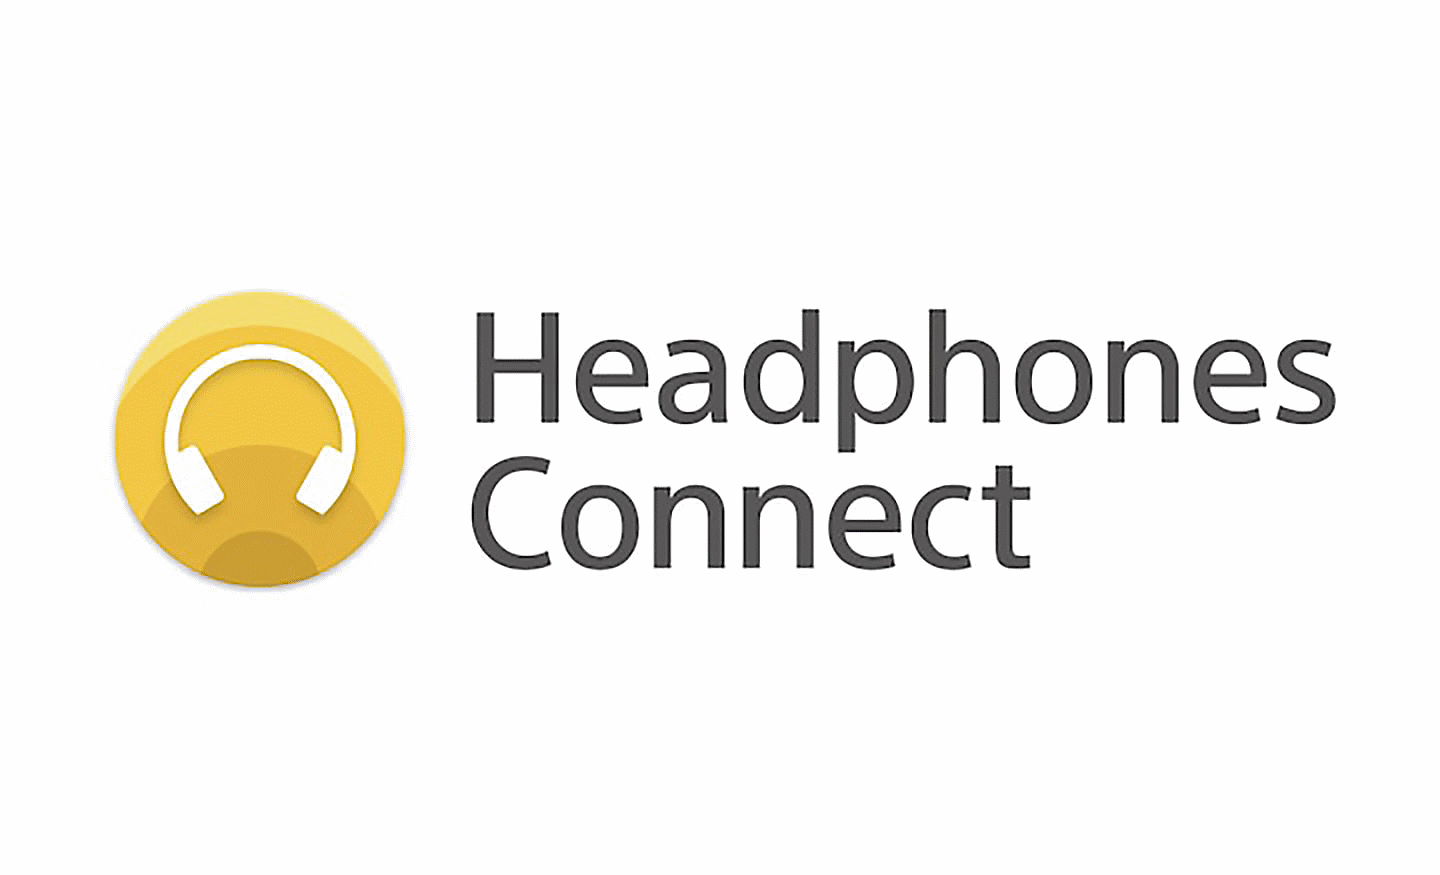 Bild des Headphones Connect Logos